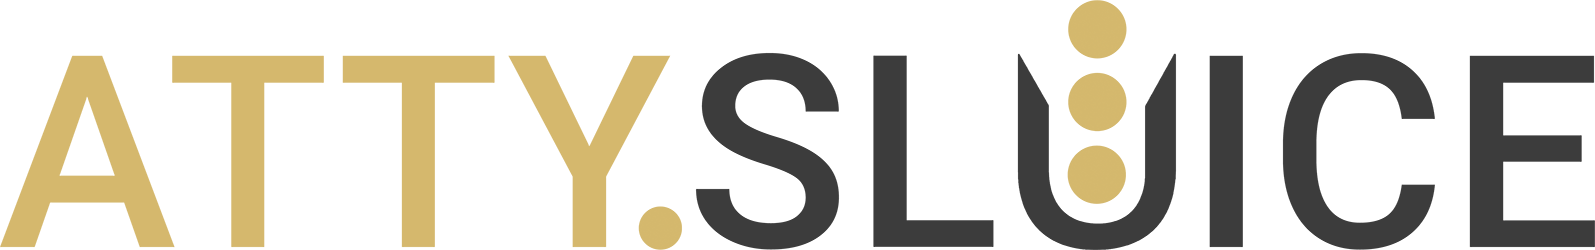 Attorney Sluice Logo